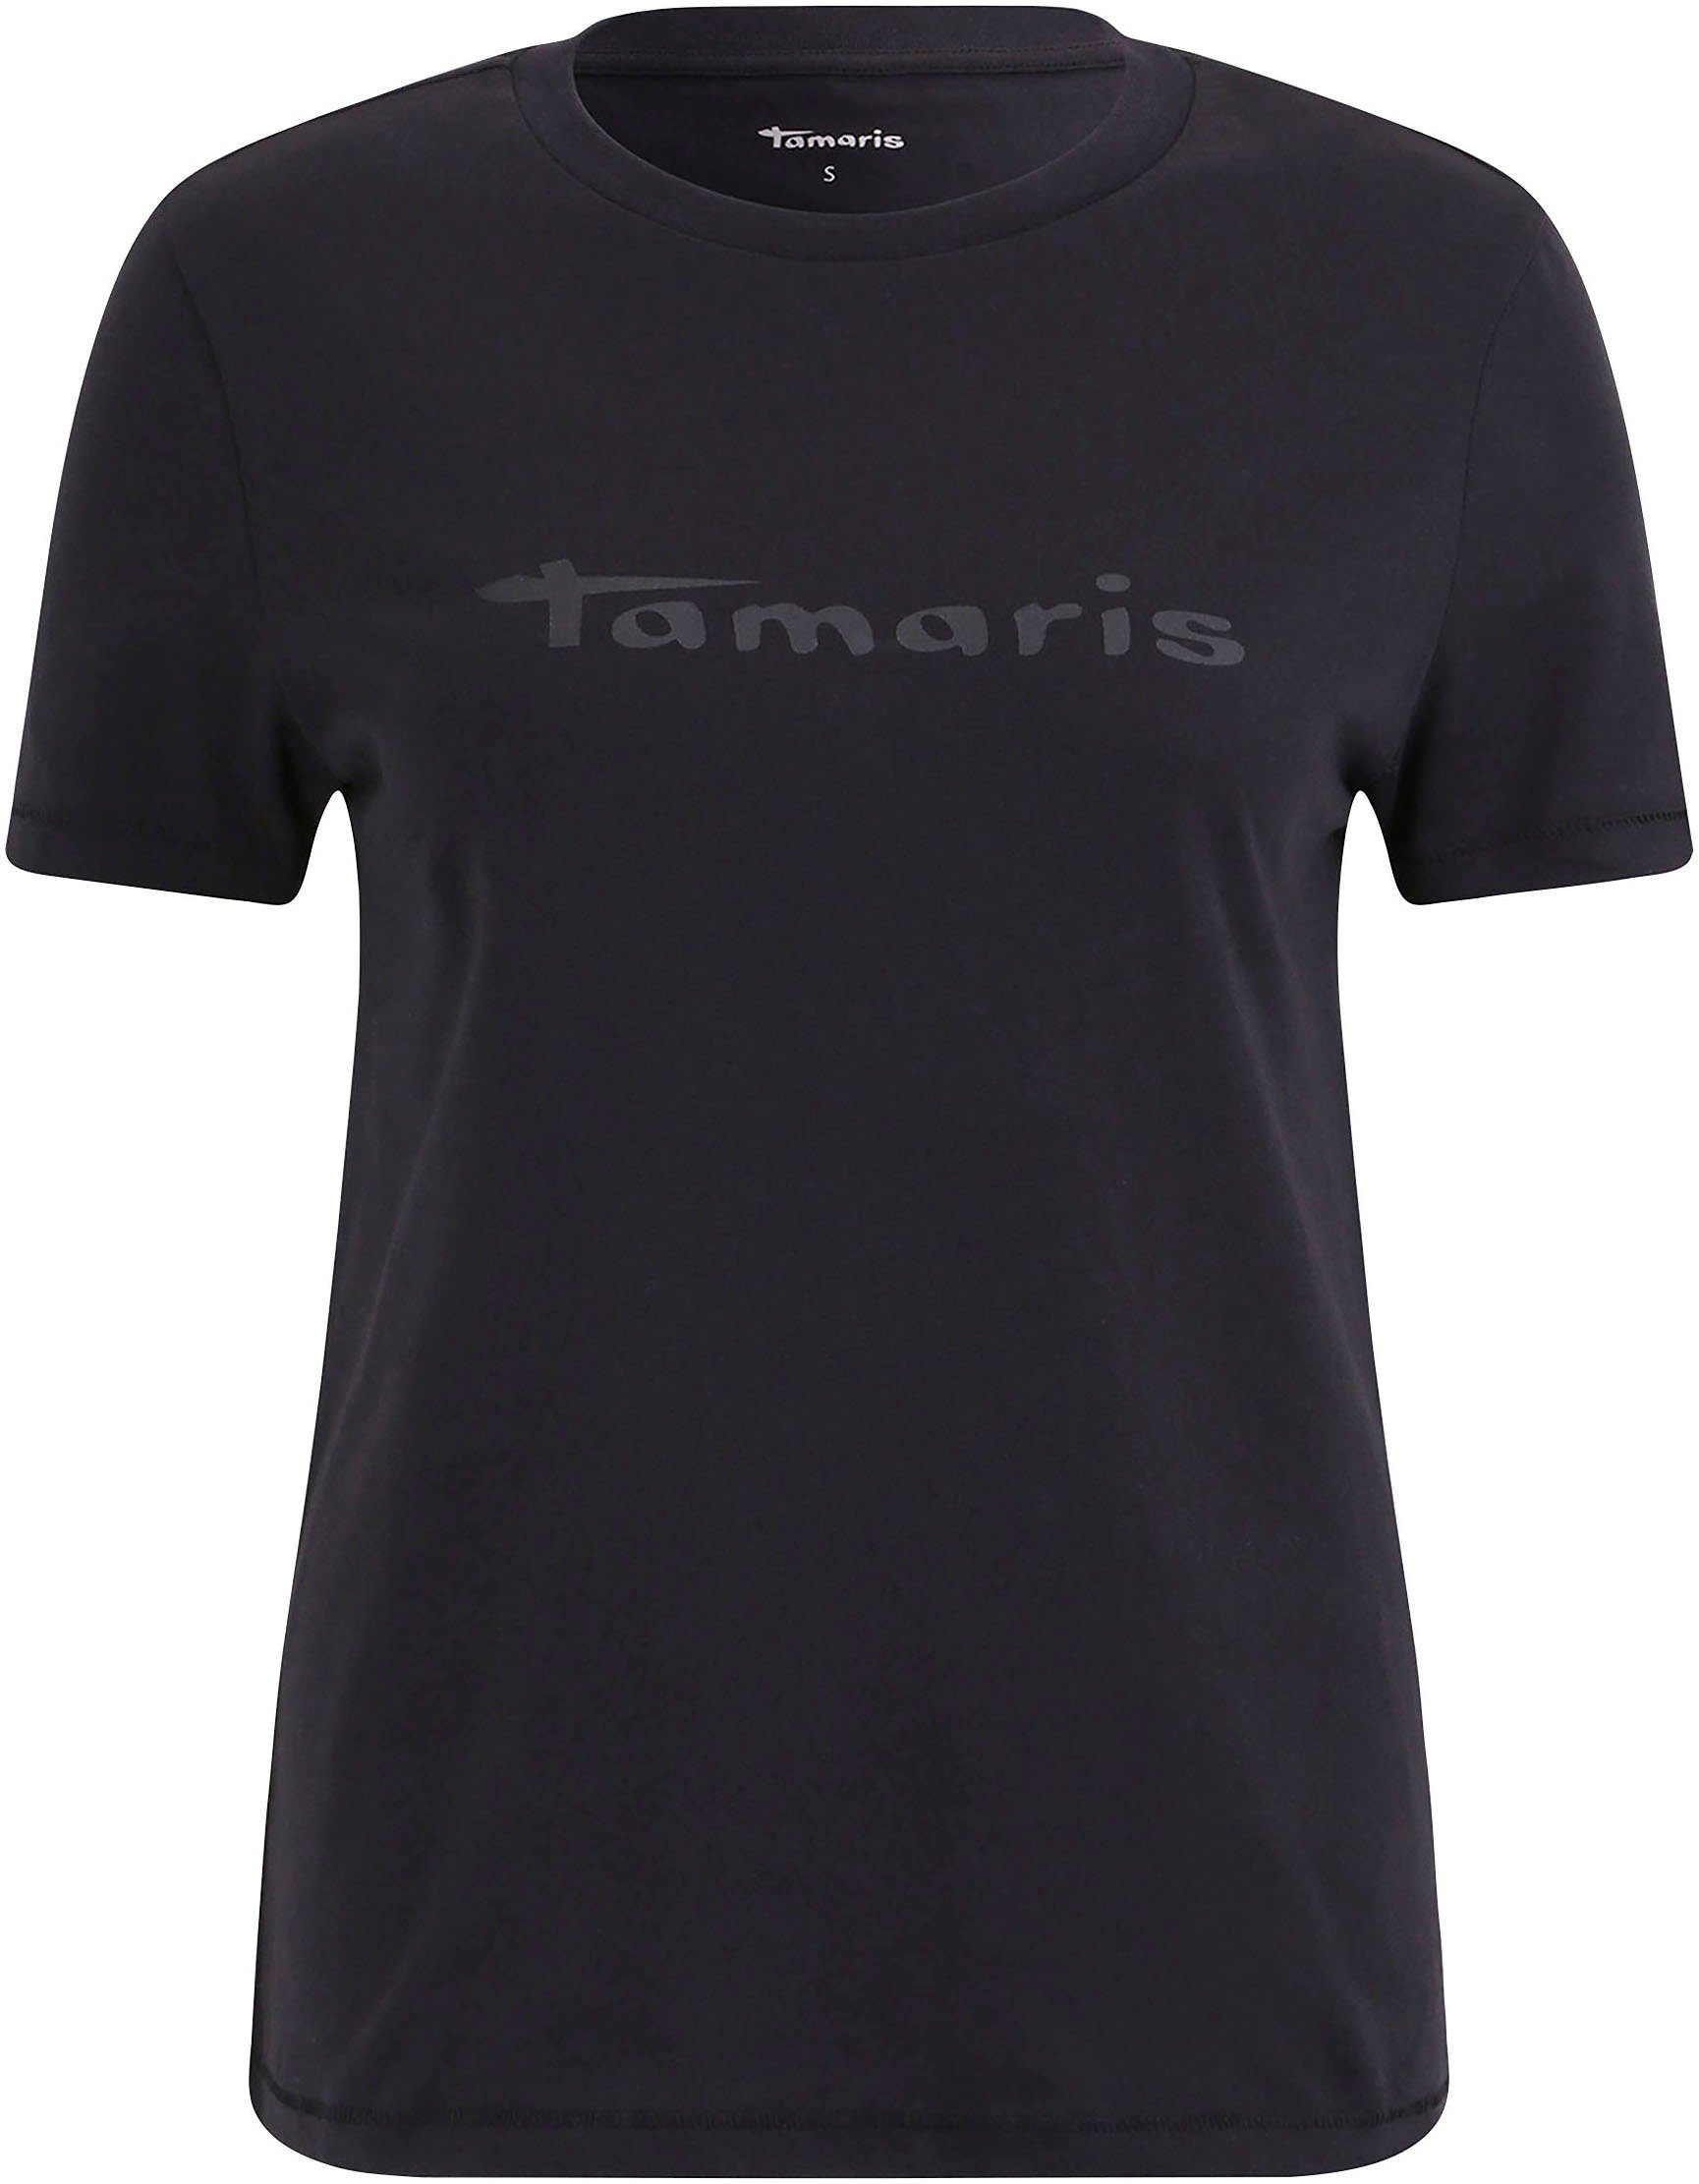 Tamaris mit Rundhalsausschnitt T-Shirt KOLLEKTION black beauty NEUE -